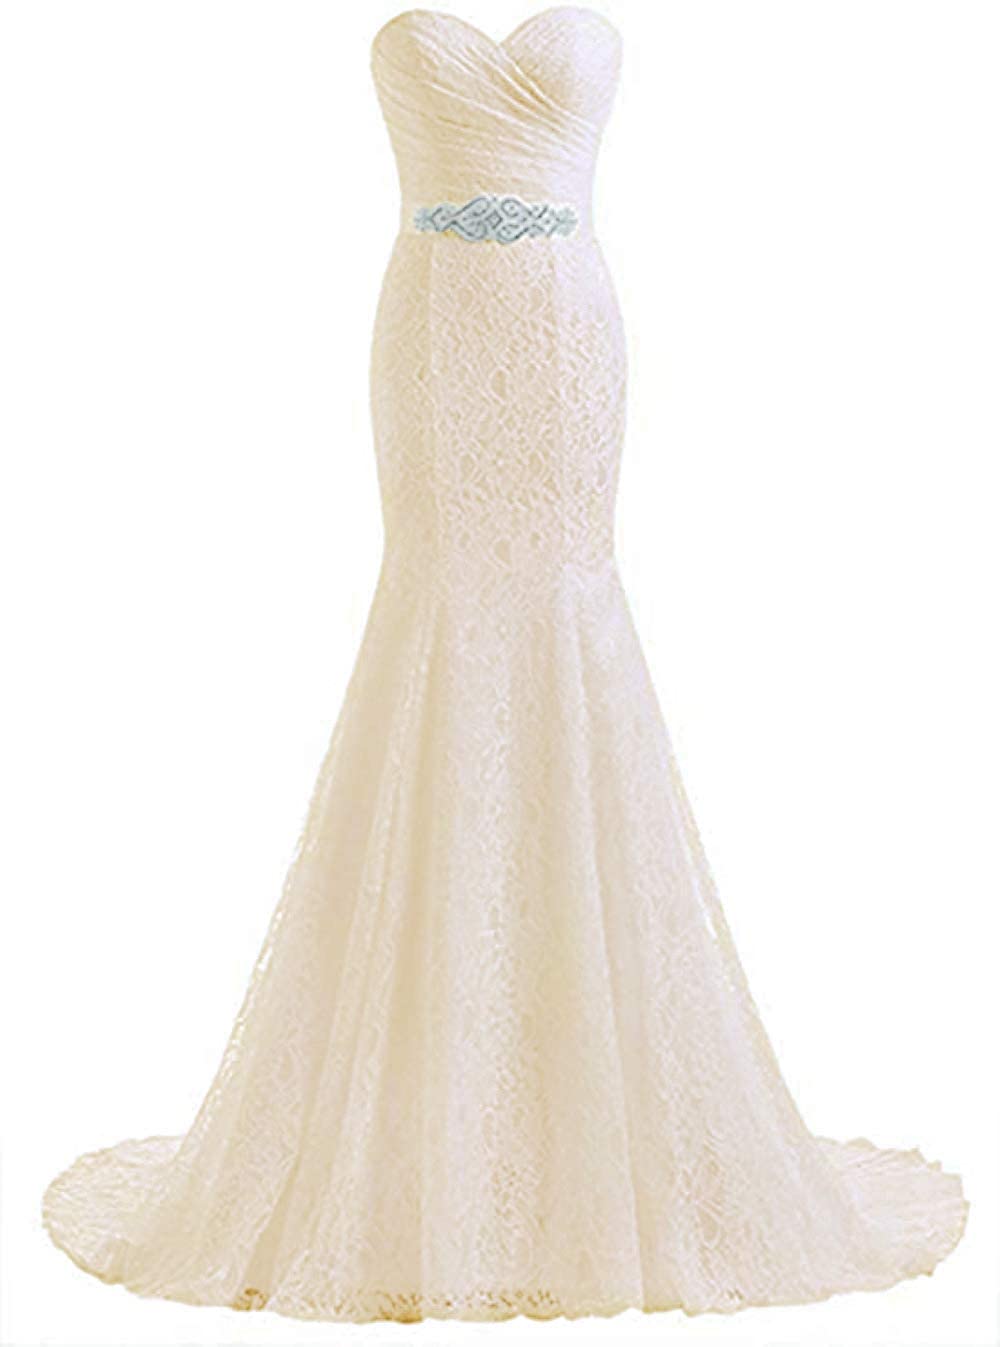 Likedpage Women's Lace Mermaid Bridal Wedding Dresses | eBay